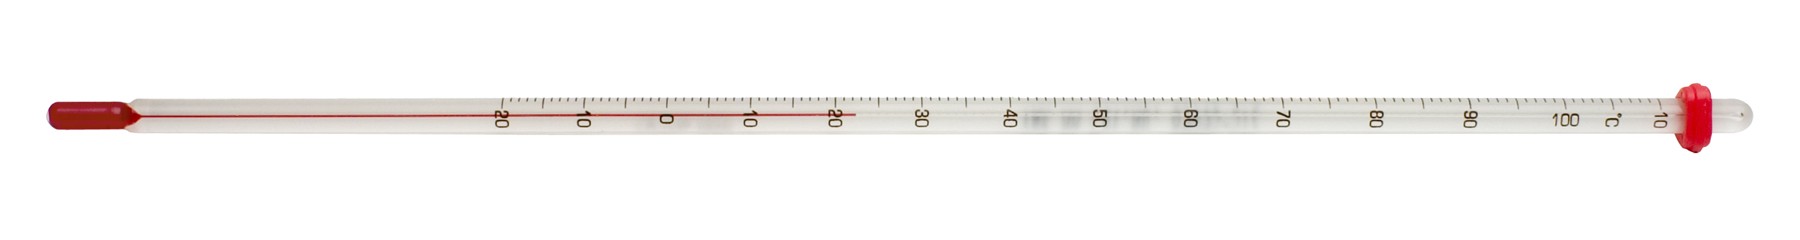 SP Bel-Art, H-B DURAC General Purpose Liquid-In-Glass Laboratory Thermometer; 0 to 230F, Total Immersion, Organic Liquid Fill